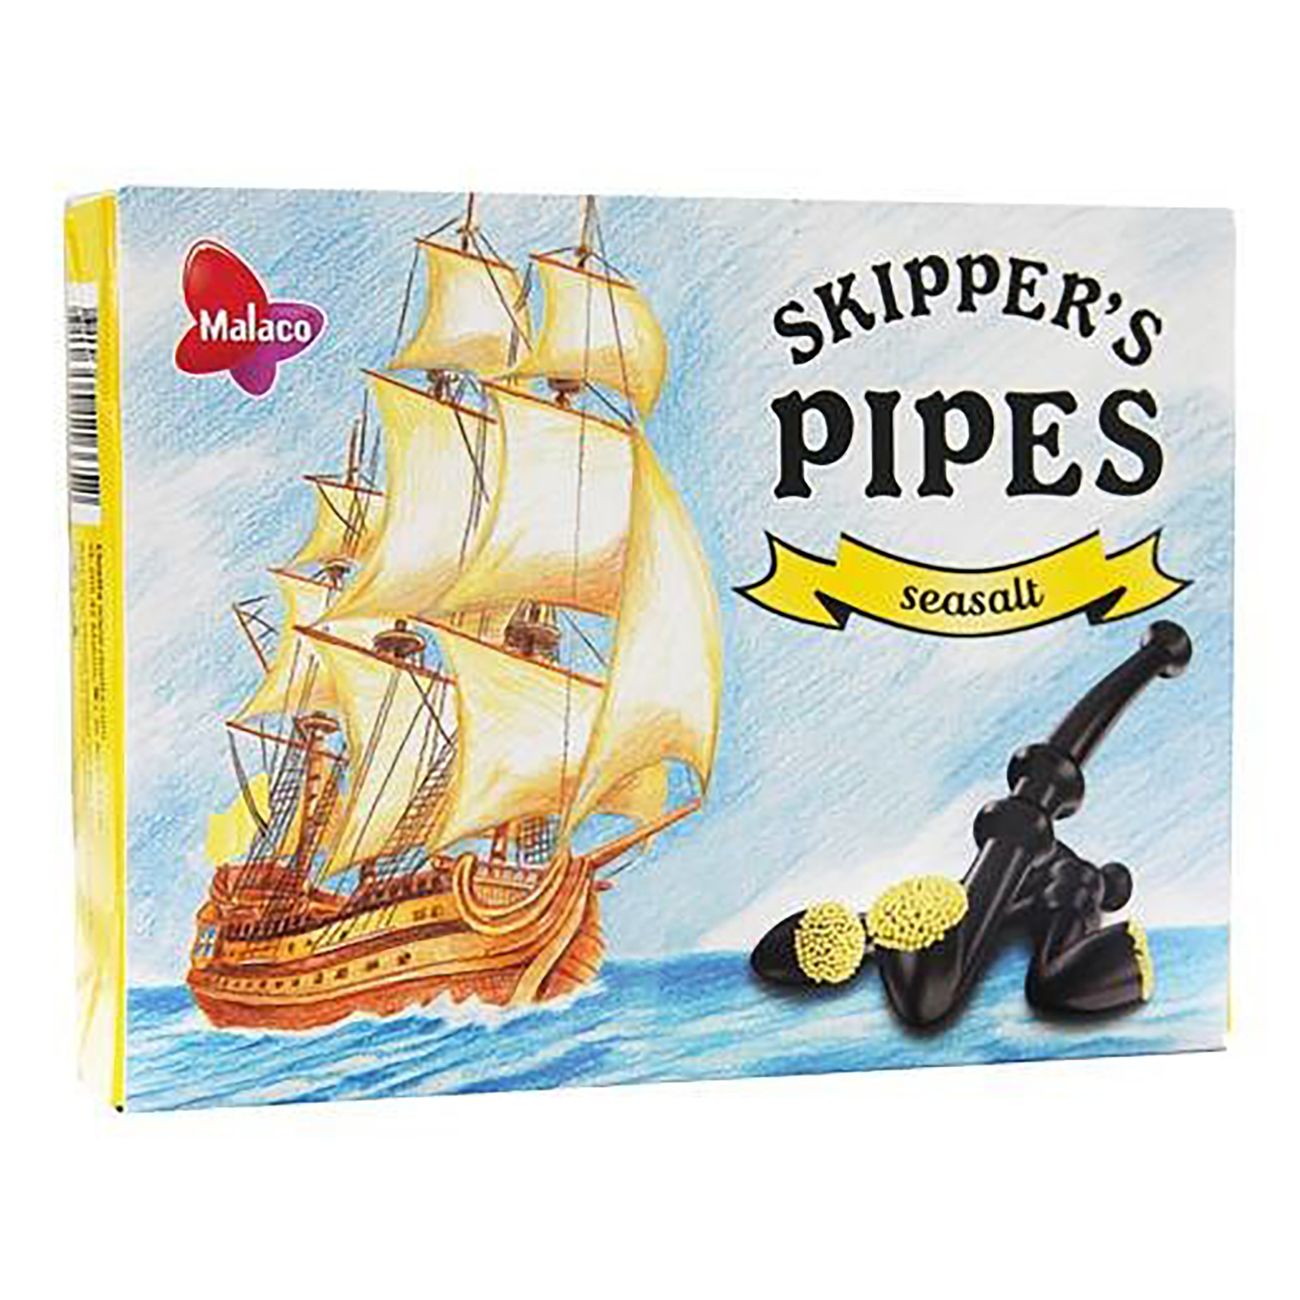 skippers-pipes-lakritspipor-seasalt-86334-1